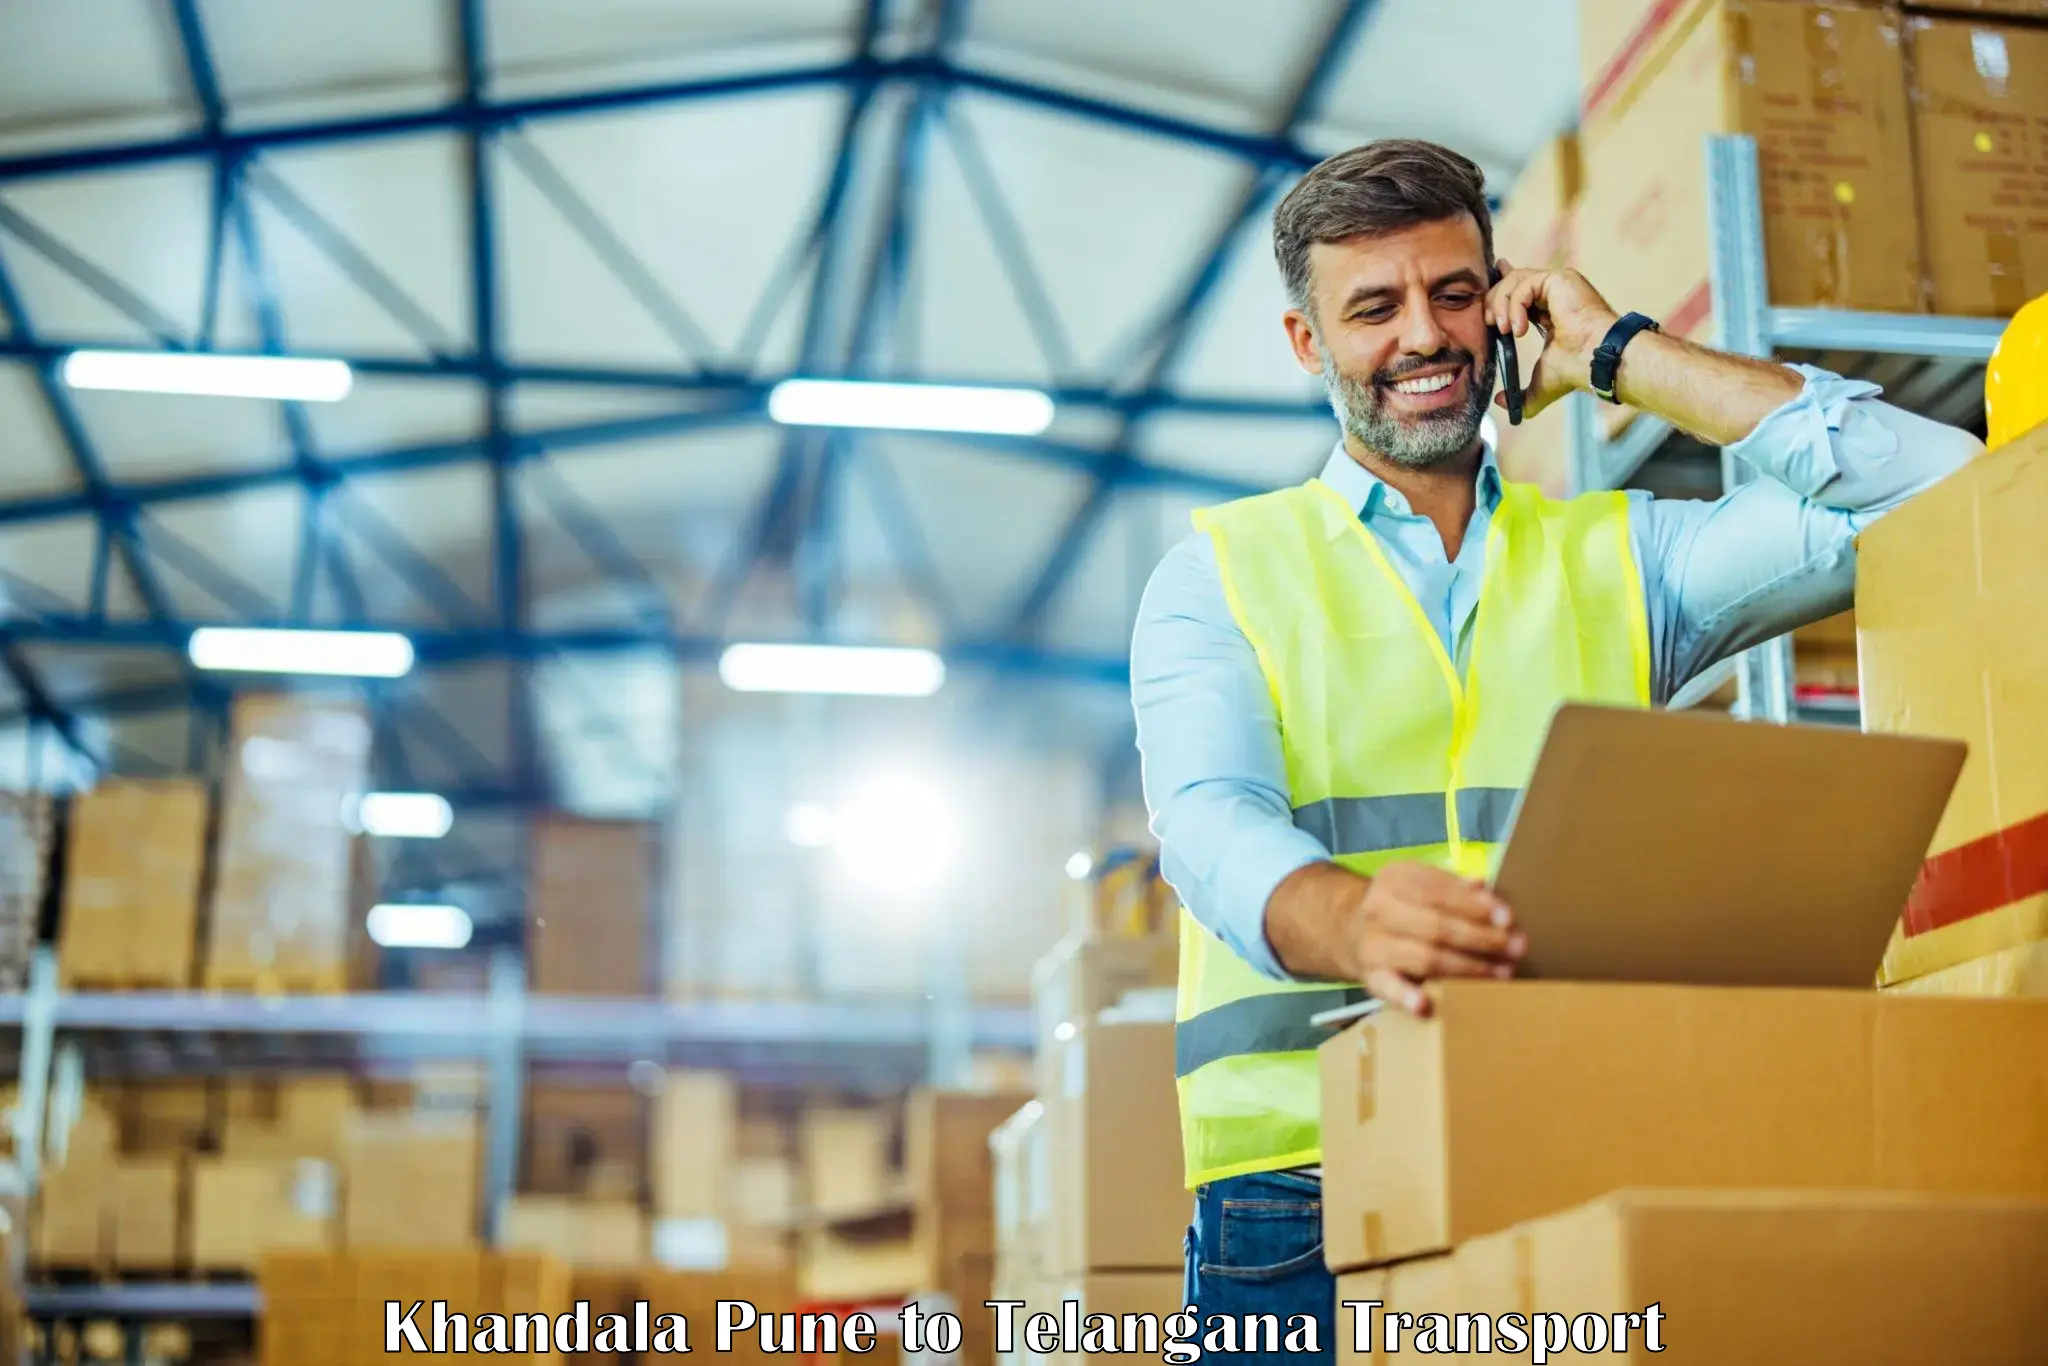 Shipping partner Khandala Pune to Gangadhara